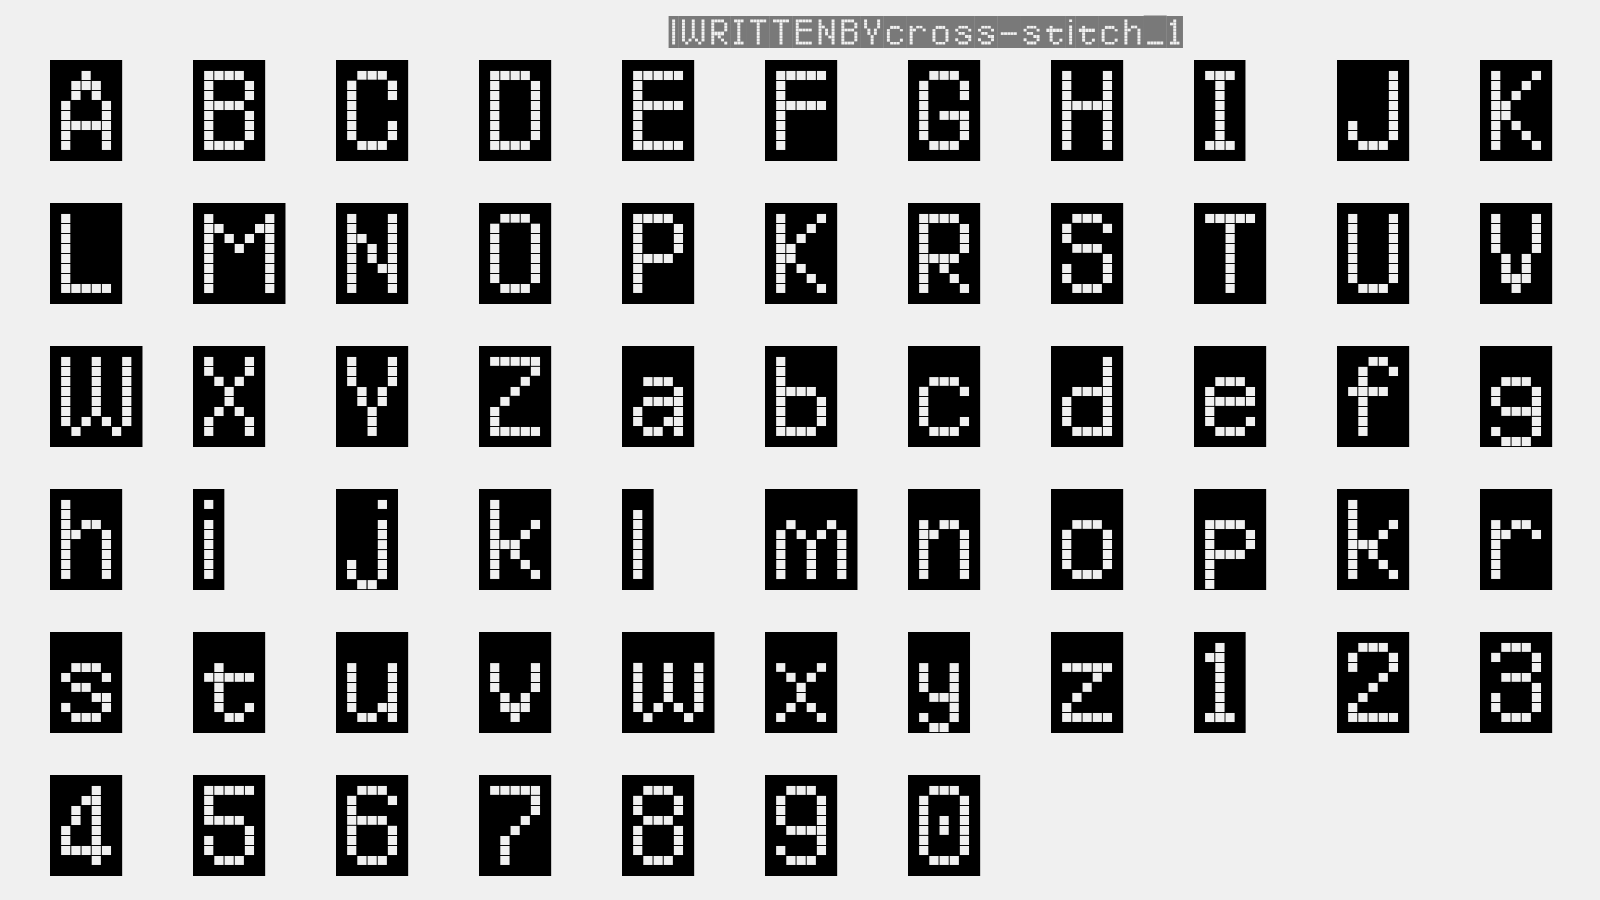 cross-stitch _1 - 大写字母/小写字母/数字